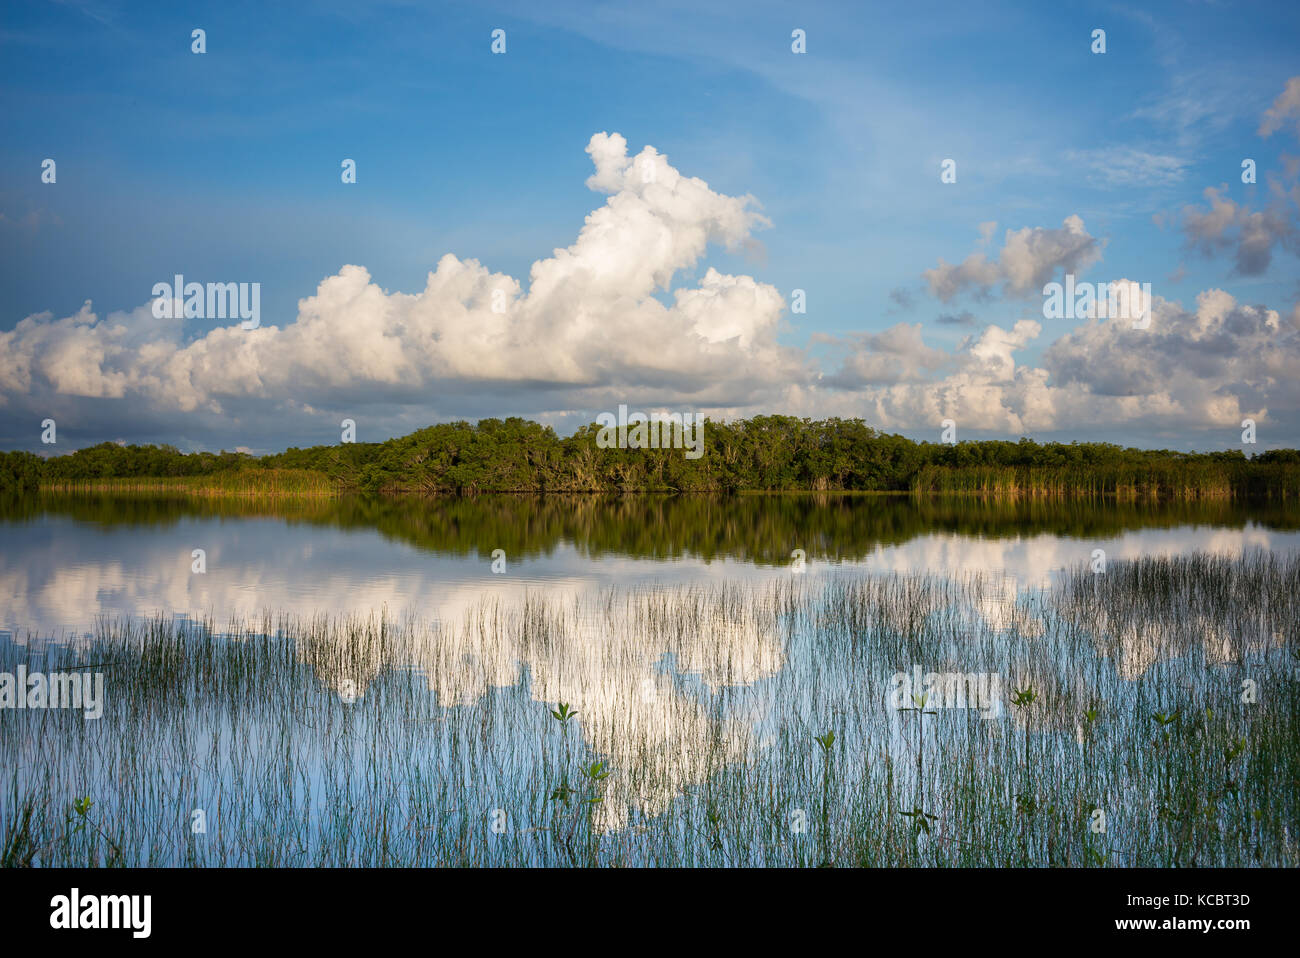 Everglades National Park Landschaft. Everglades National Park in South Florida, Usa befindet. Lebensraum der amerikanischen Krokodile. Stockfoto